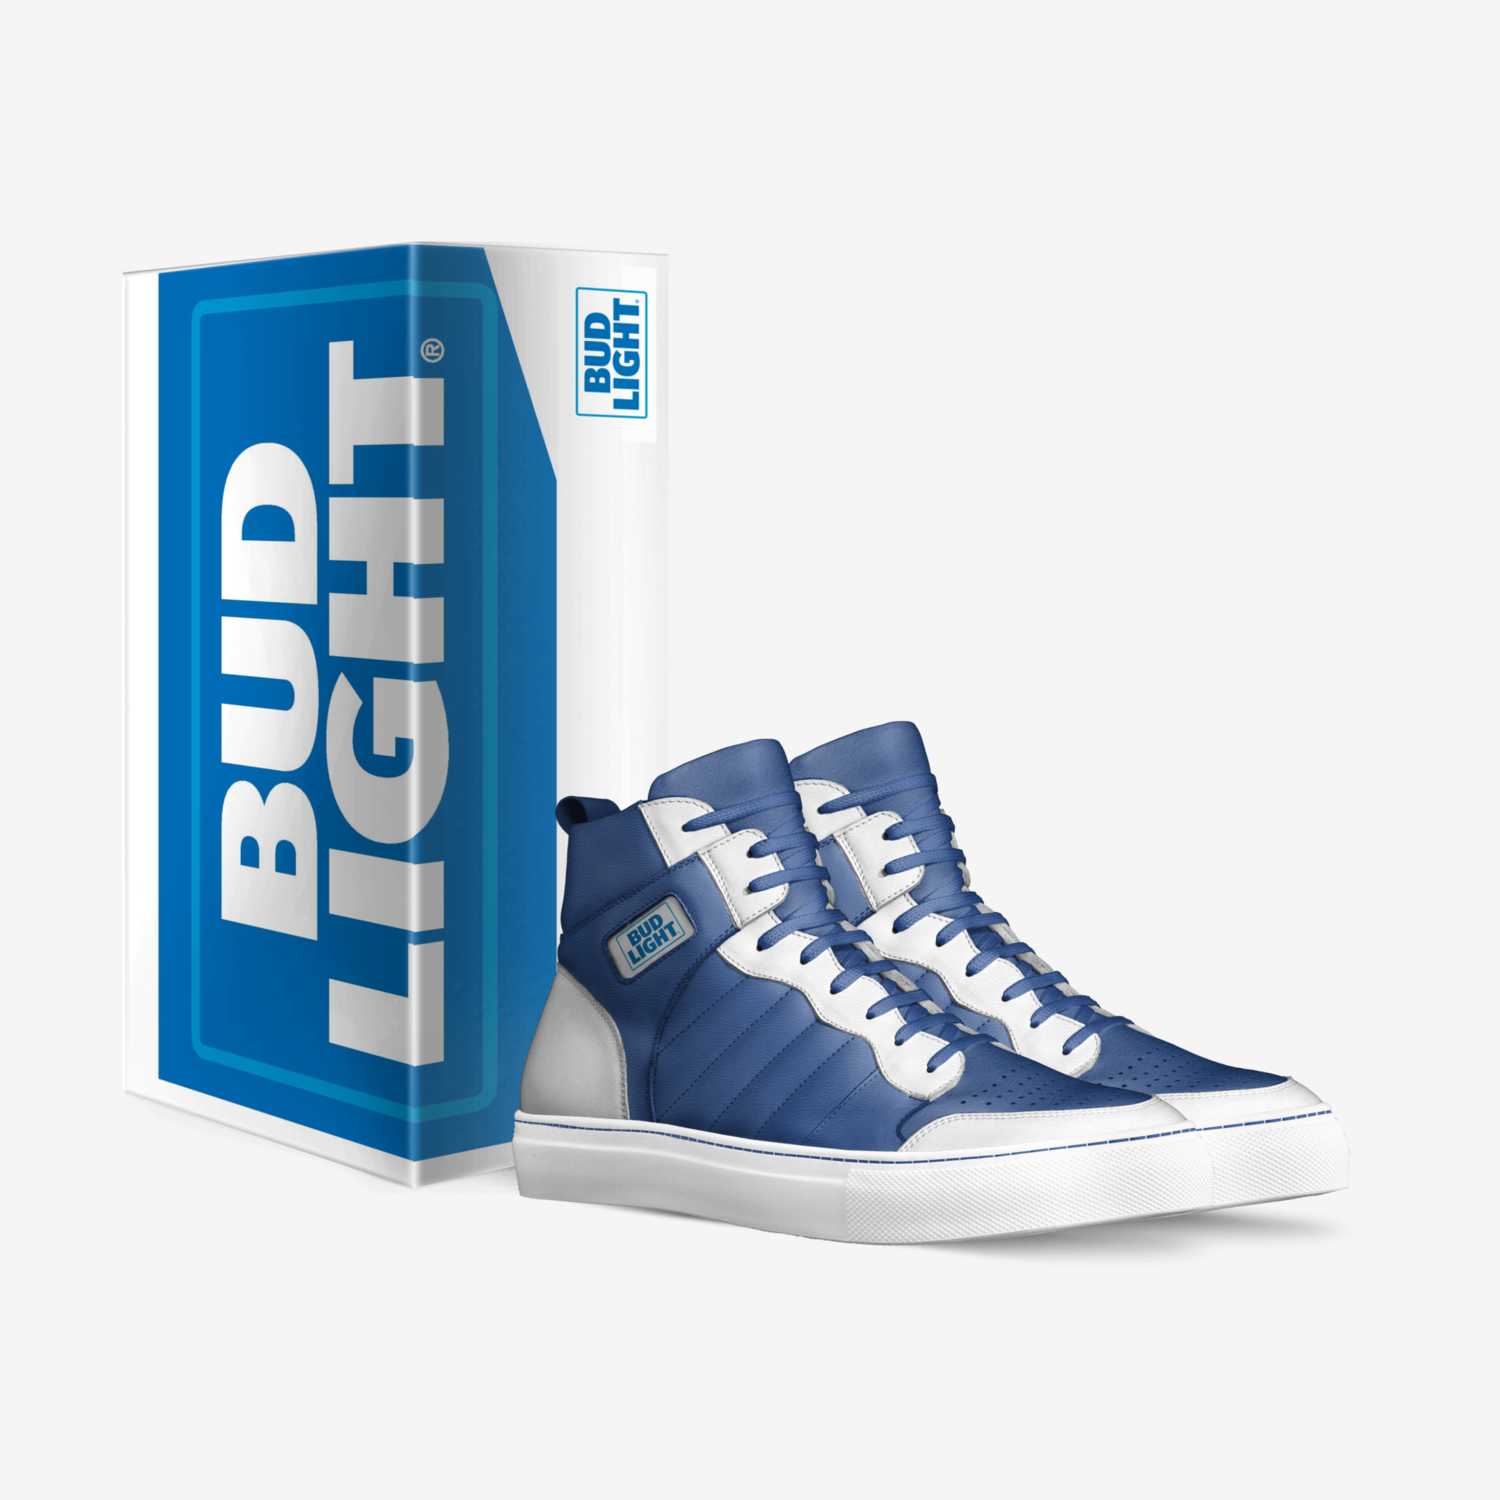 Bud Light SQUAD | A Custom Shoe concept by Morgan Kurtz